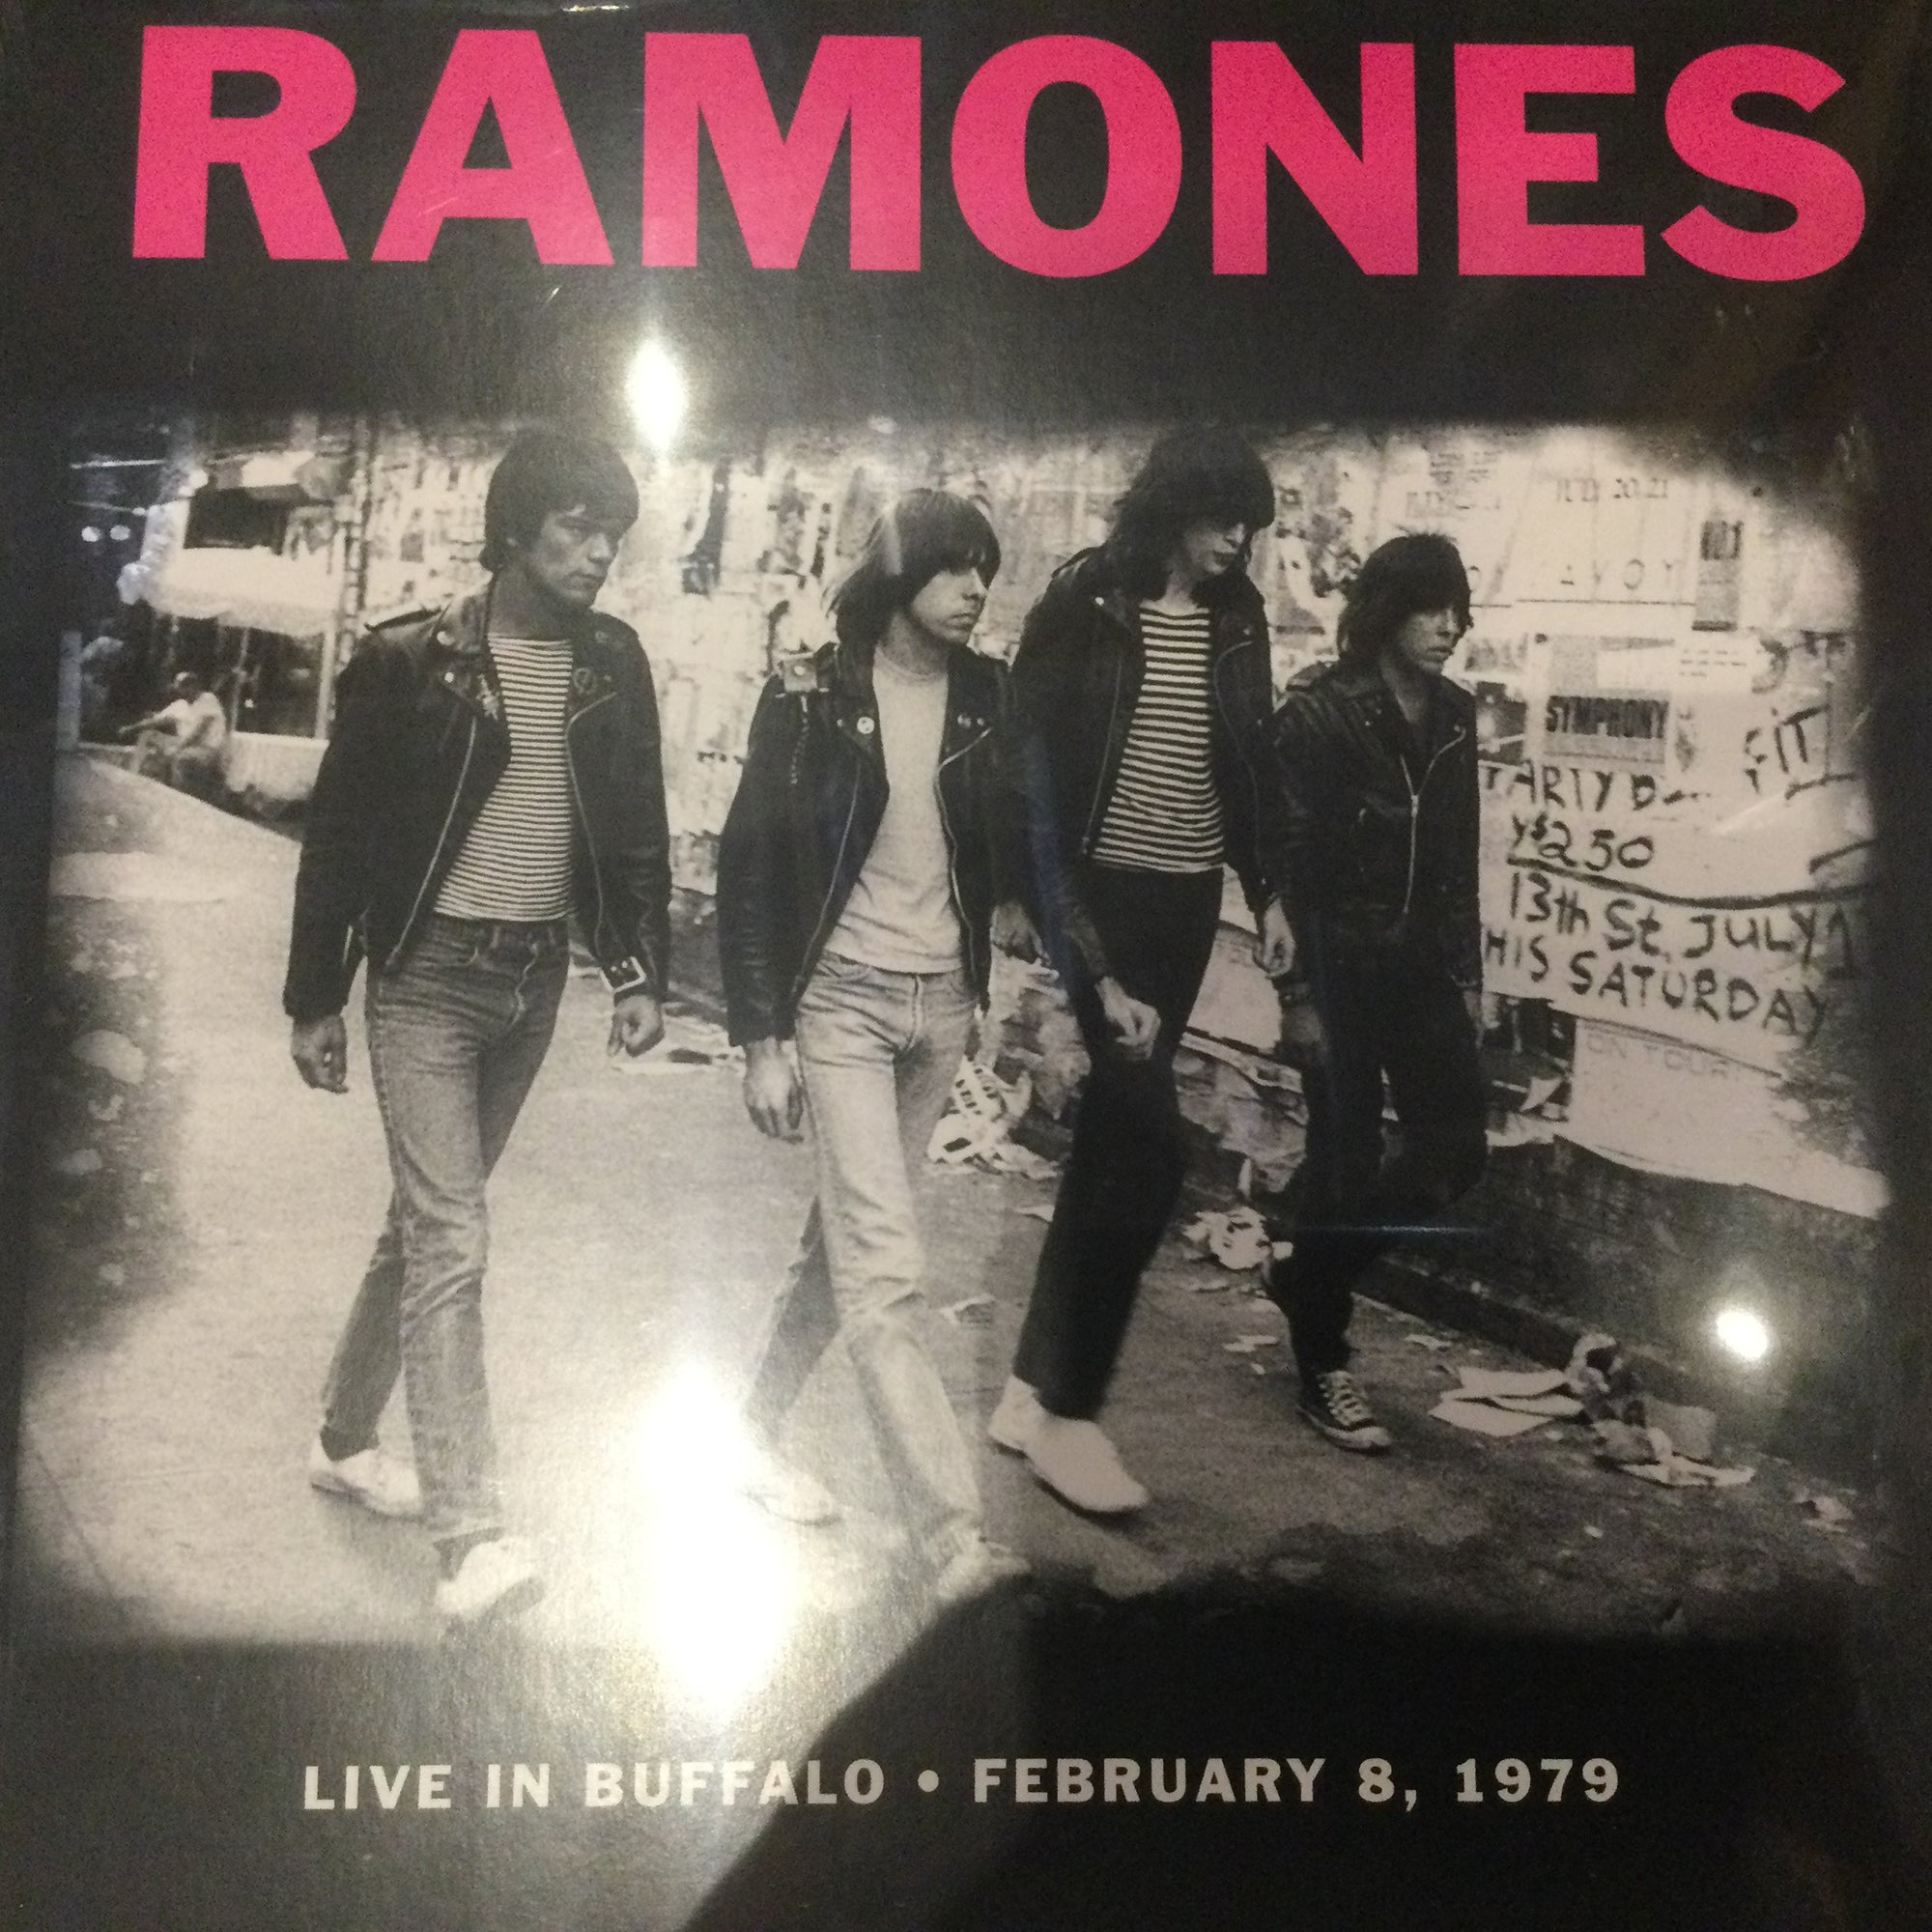 Ramones - Live in Buffalo 1979 (Vinyl LP)